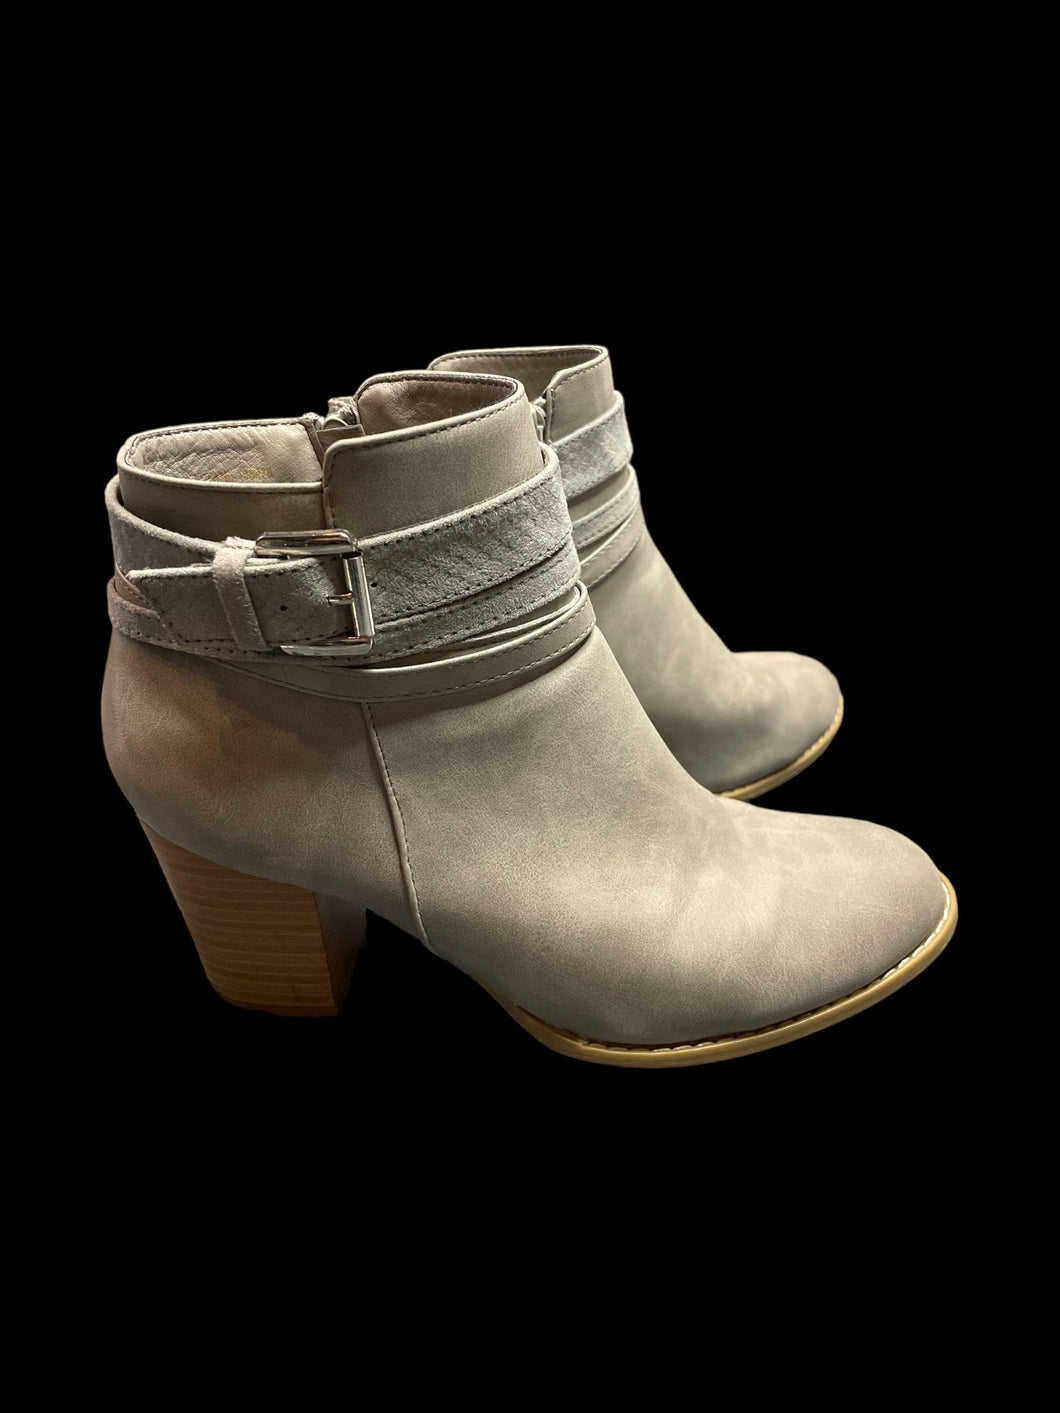 7.5M/9W Grey pleather heeled booties w/ buckle details, & zipper closure